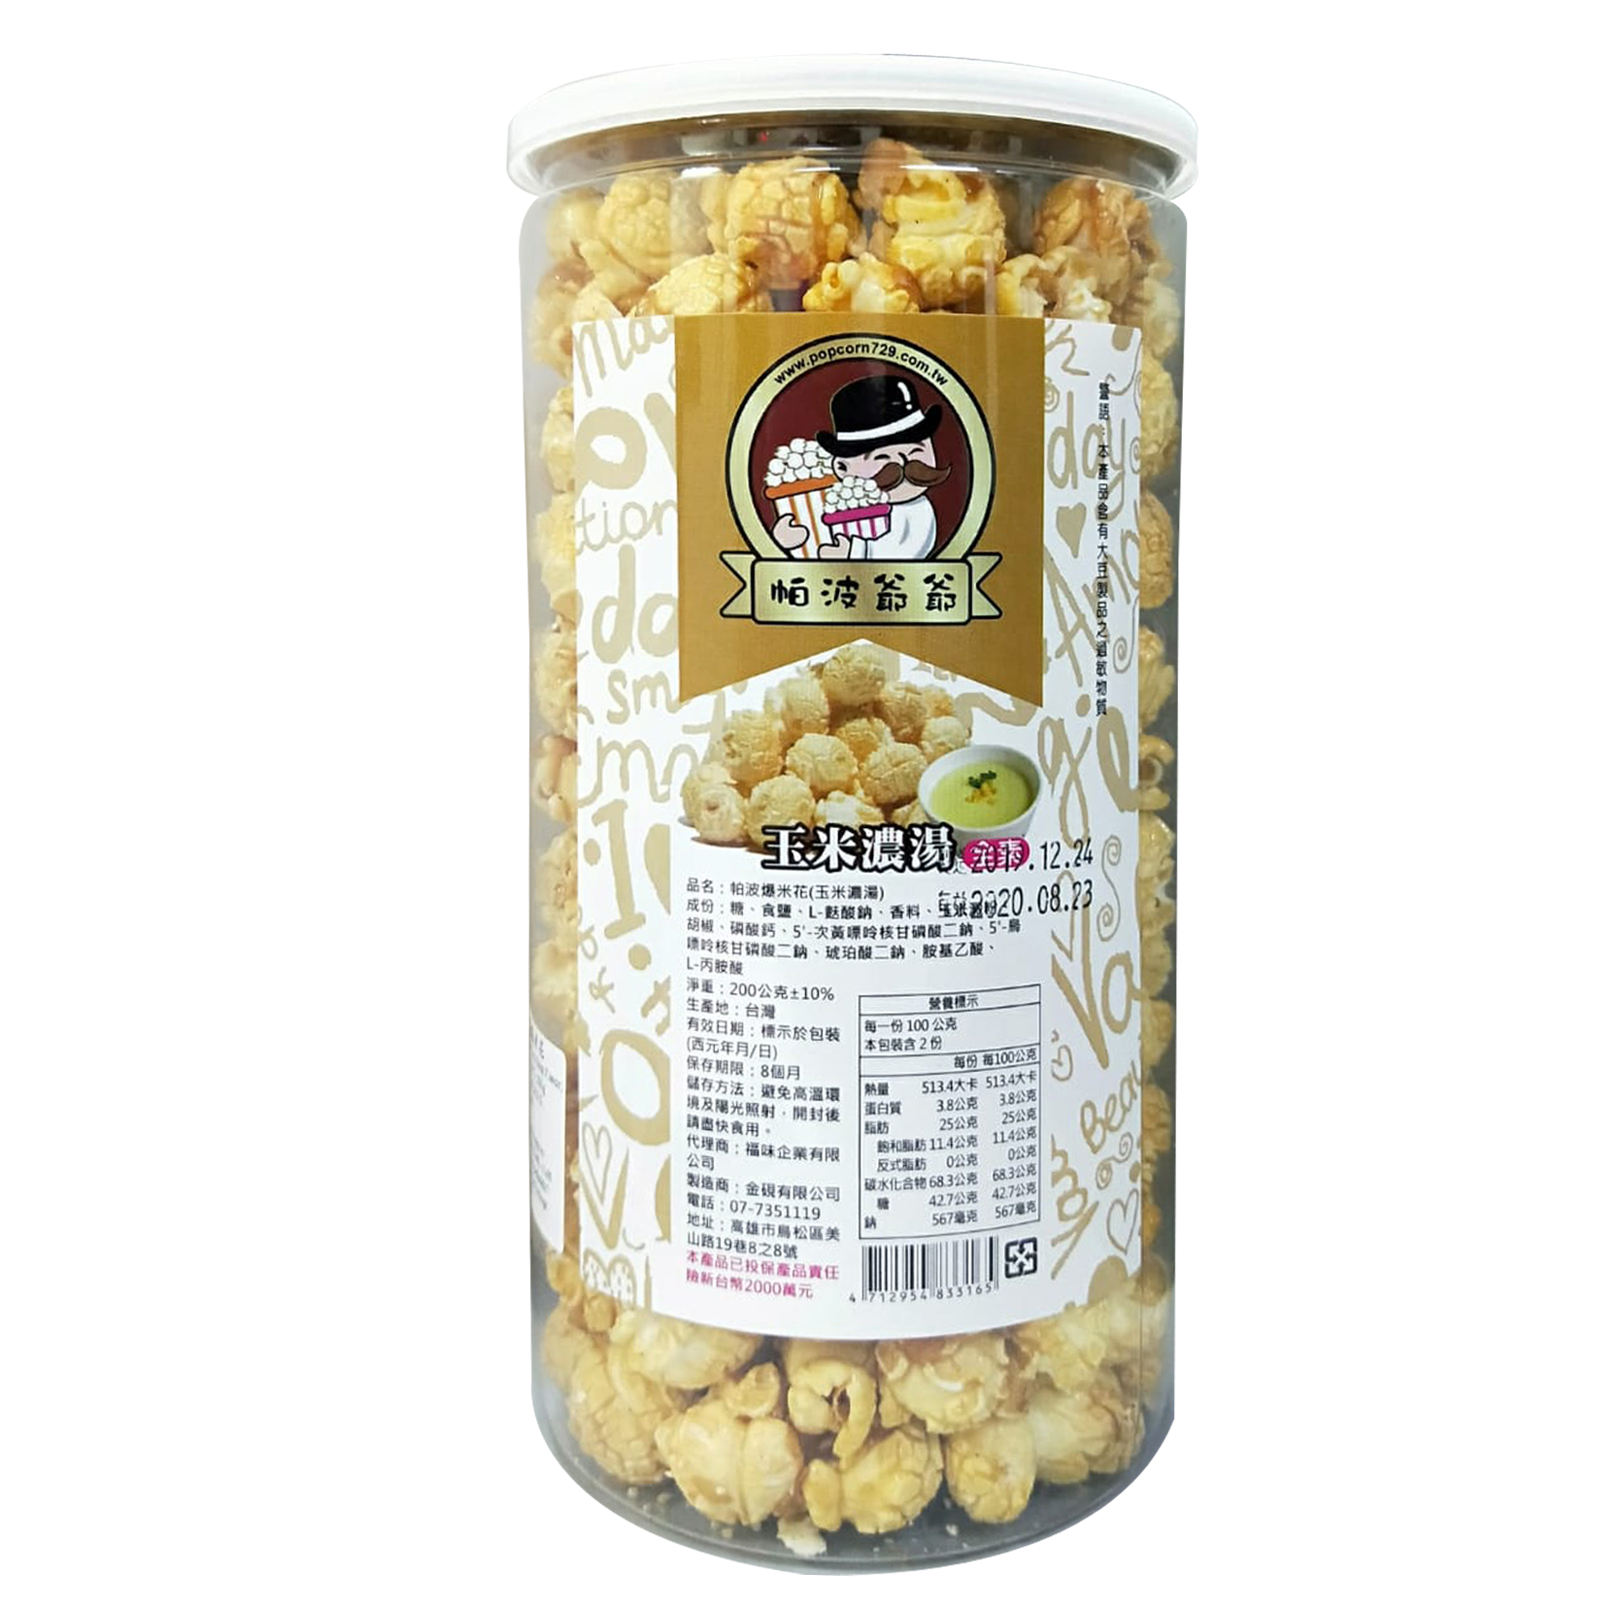 Image Papo Popcorn Vegan Corn soup 金砚-玉米濃湯爆米花 200grams